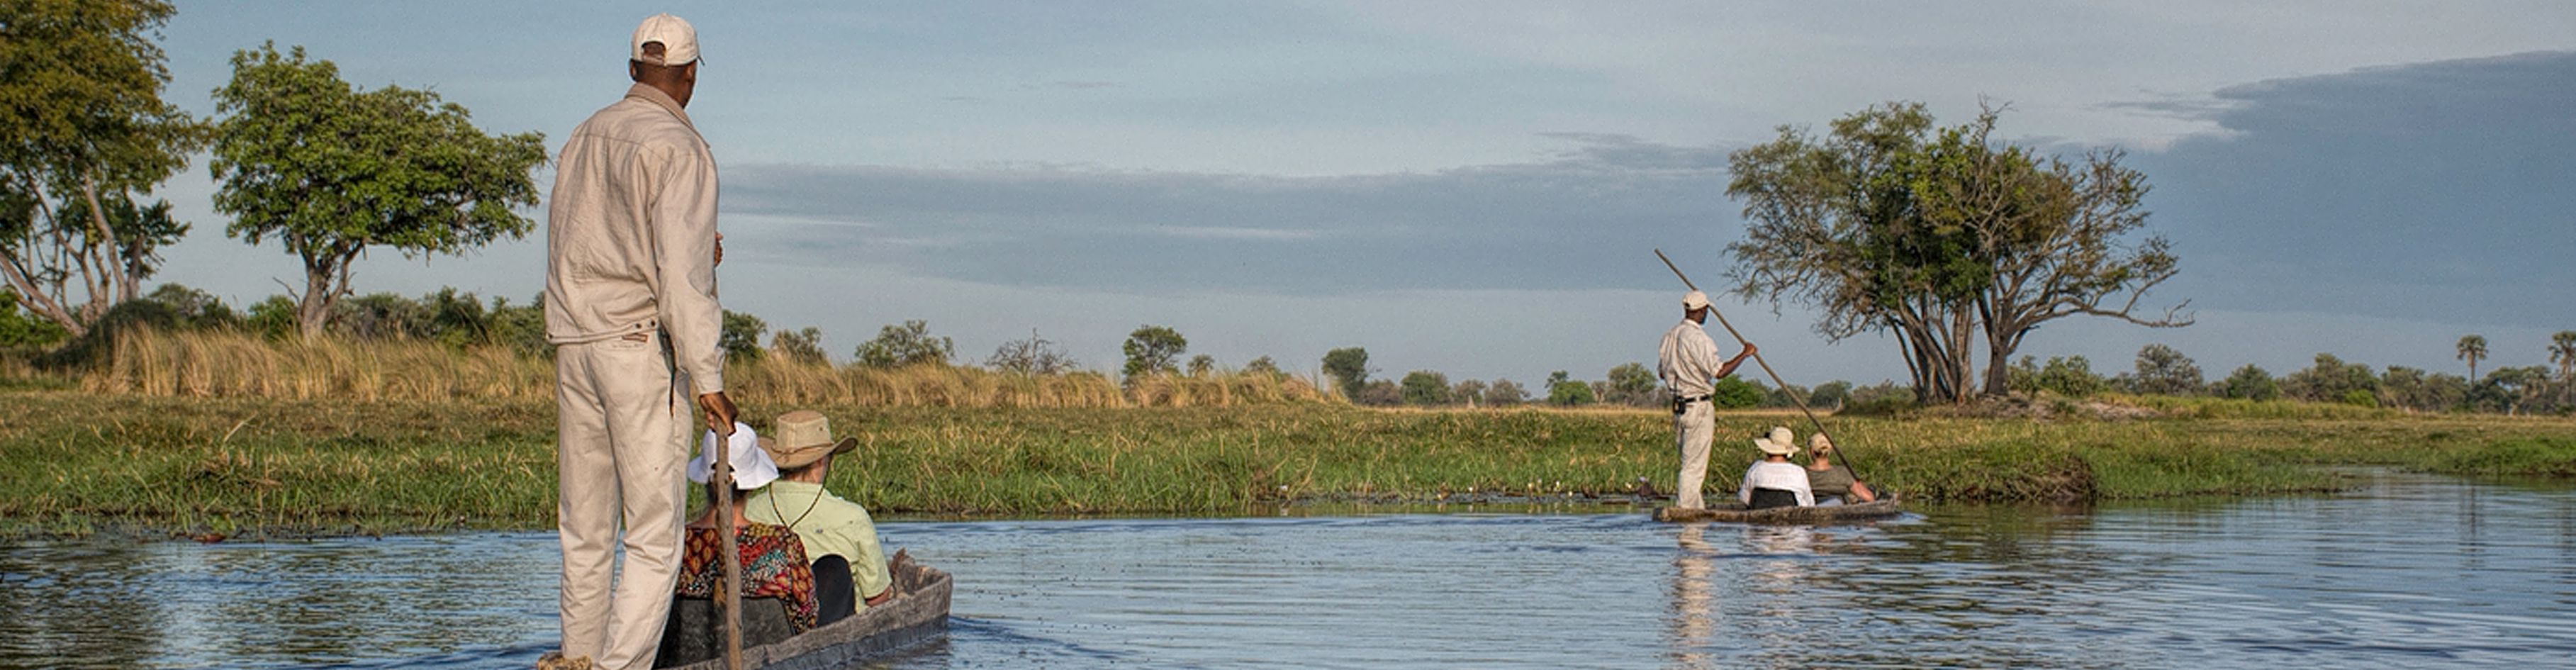 Mokoro, chief's island, Okavango delta, Botswana